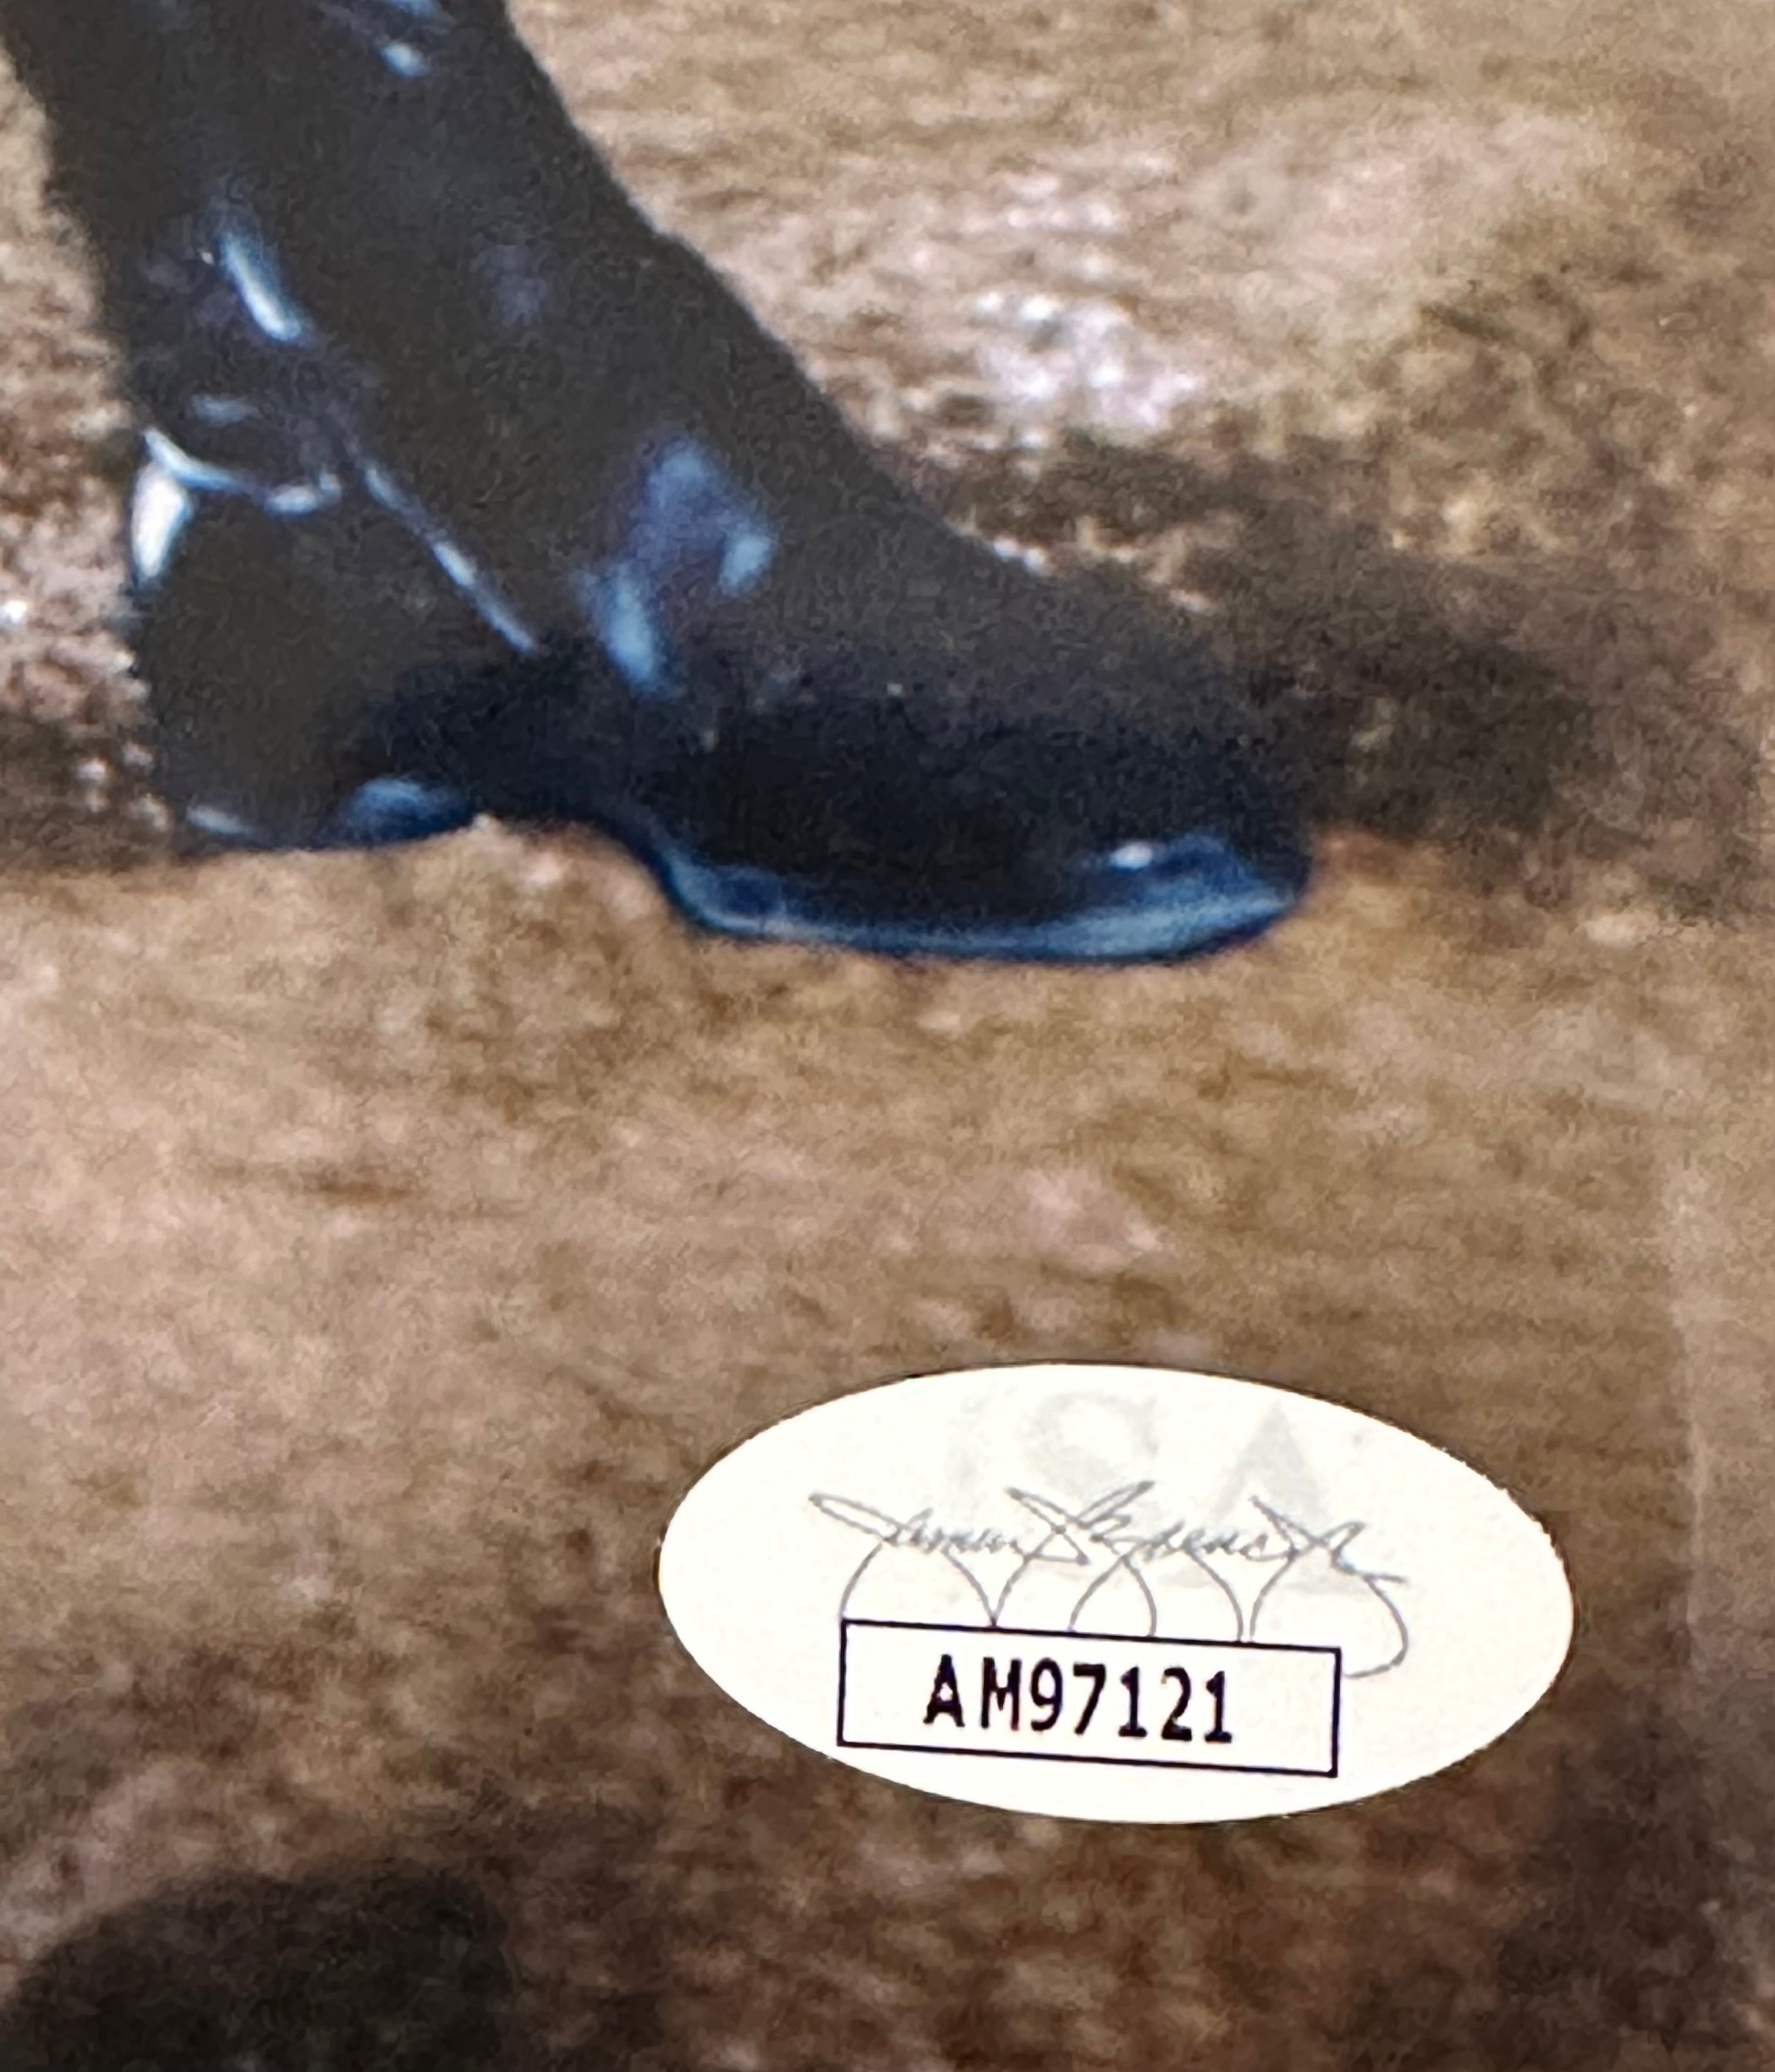 Batman Adam West rare autograph 8x10 photo certified by JSA